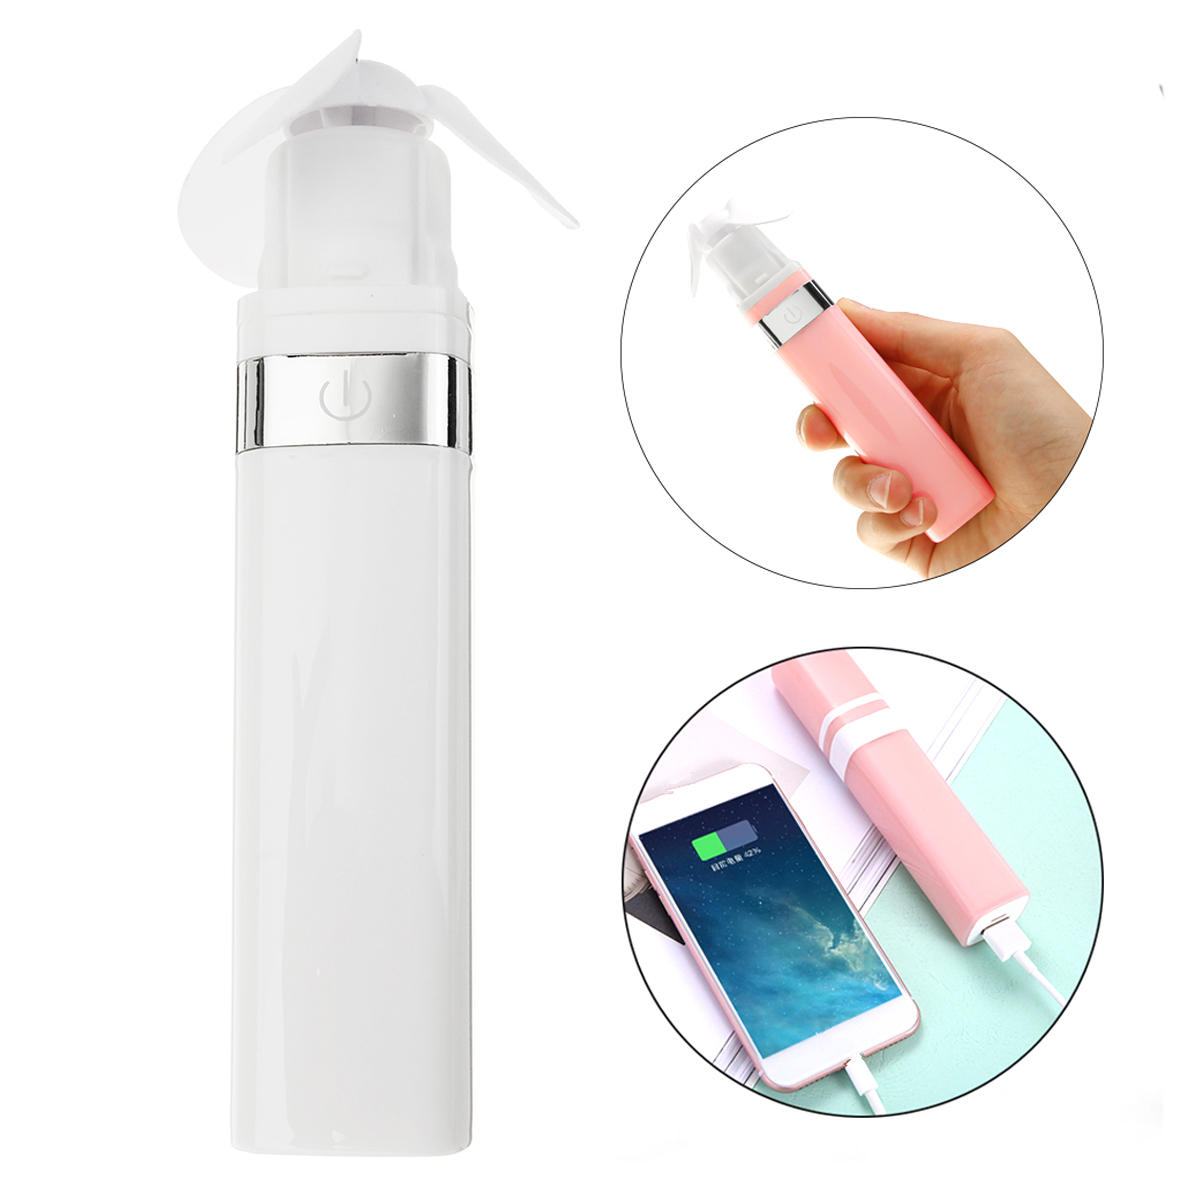 Portable Mini Handheld USB Lipstick Fan Electric Cooler Rechargeable 2600mAh Power Bank